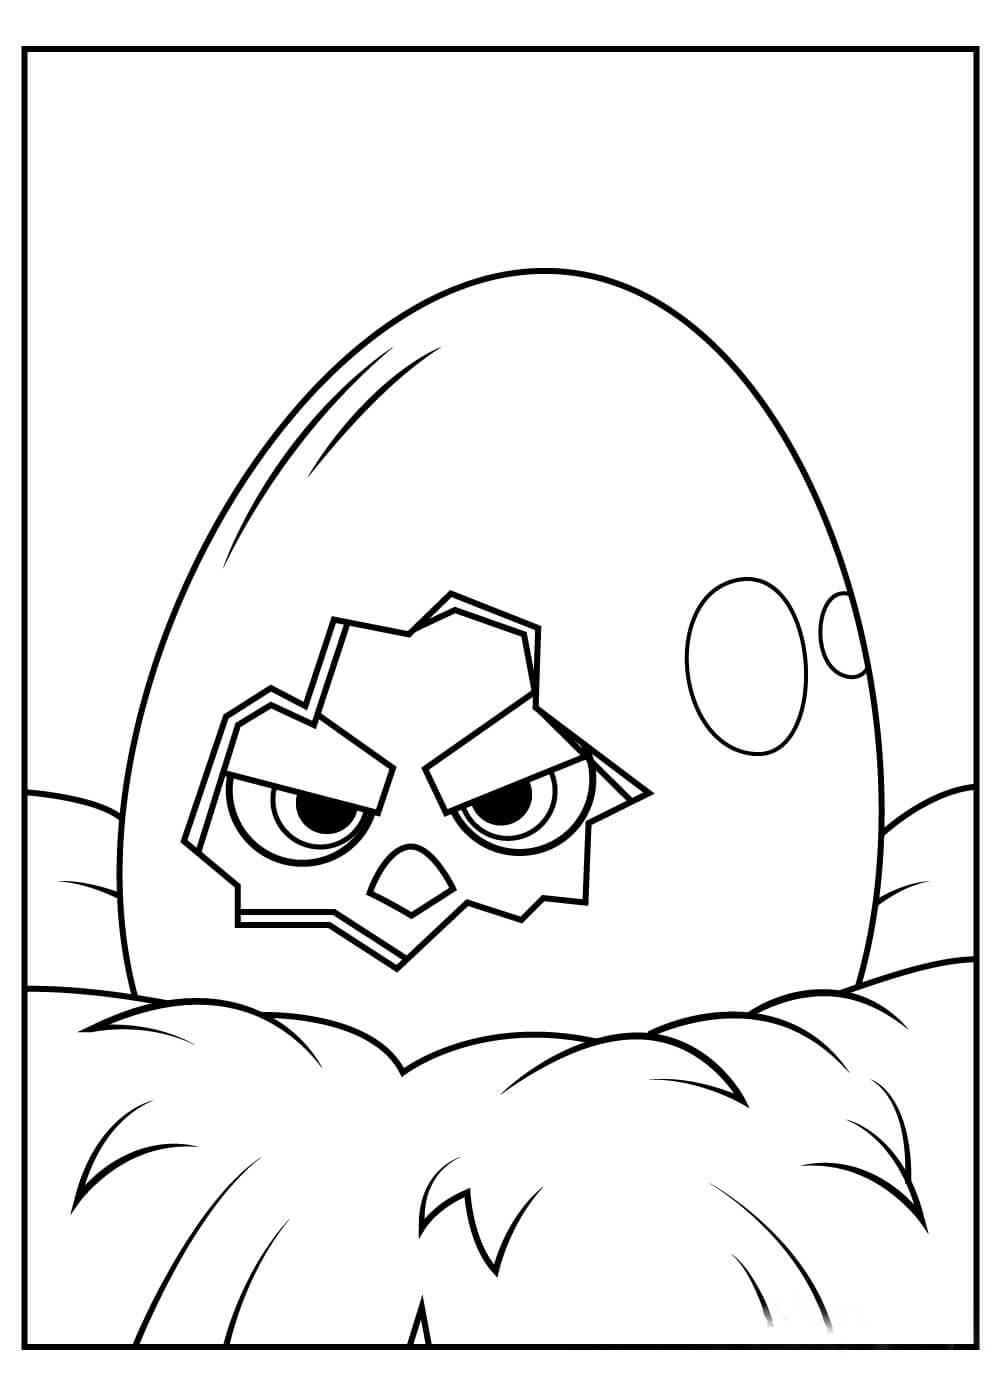 Dibujos de Angry Bird en Huevo para colorear